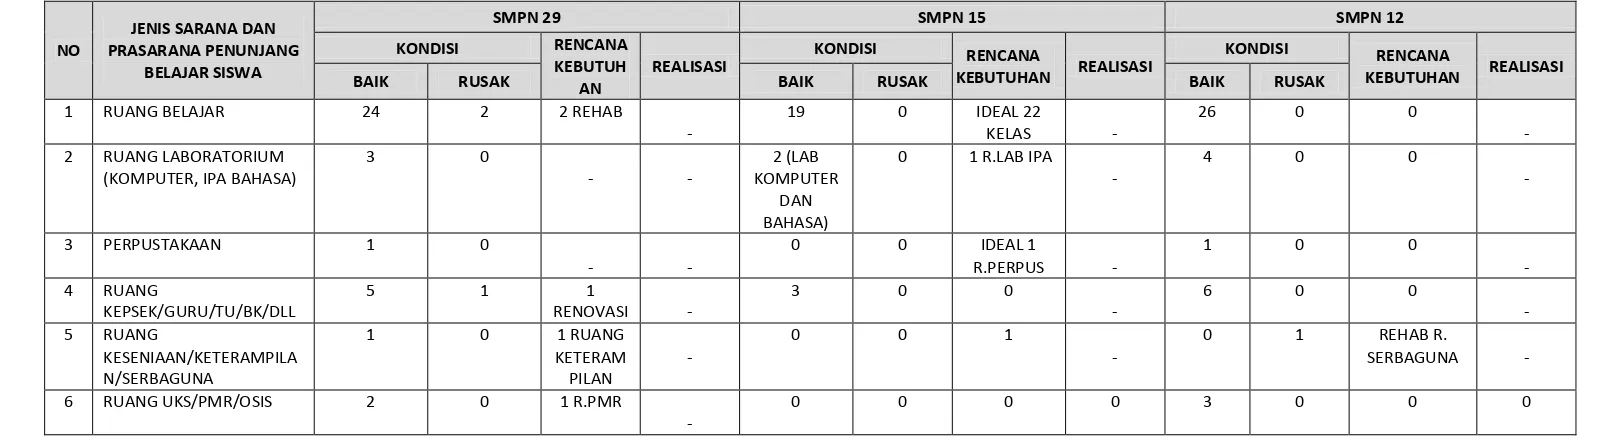 Tabel 1.1 Data Sarana dan Prasarana Penunjang Belajar Siswa di SMPN Se-Kecamatan Sukasari 